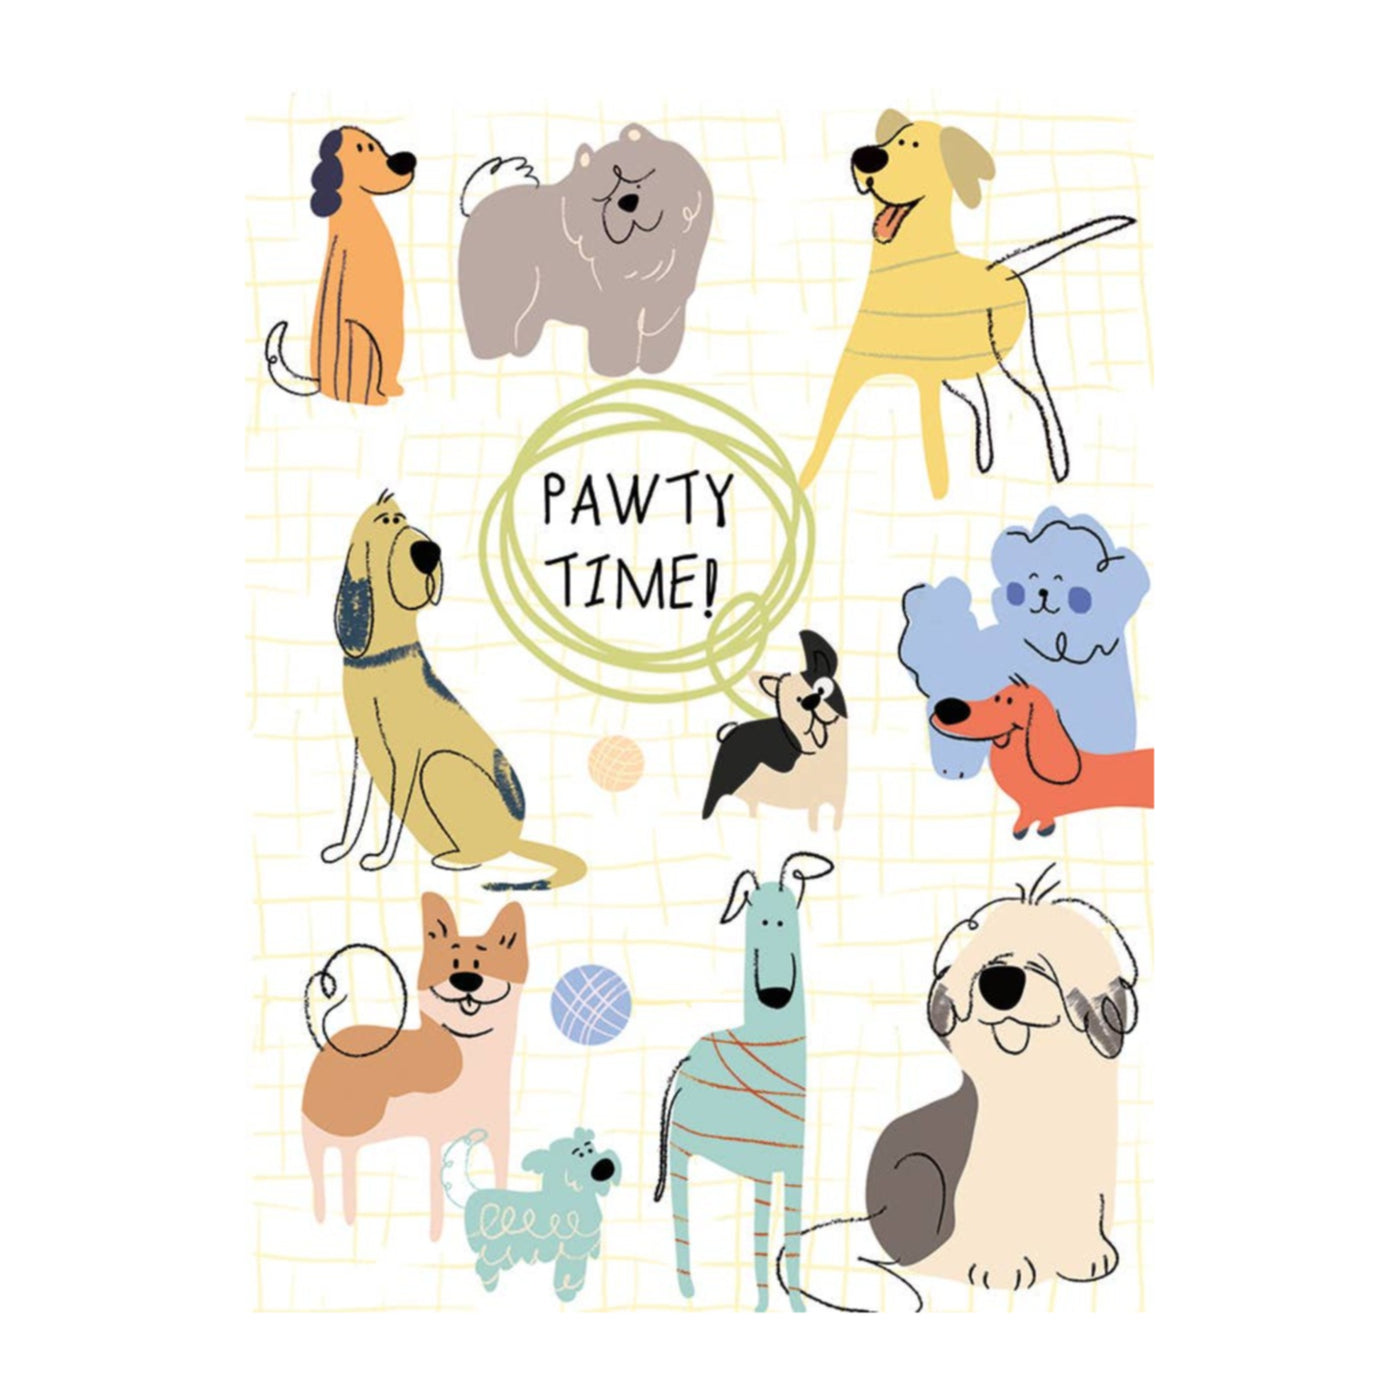 Happy Dogs Birthday Card